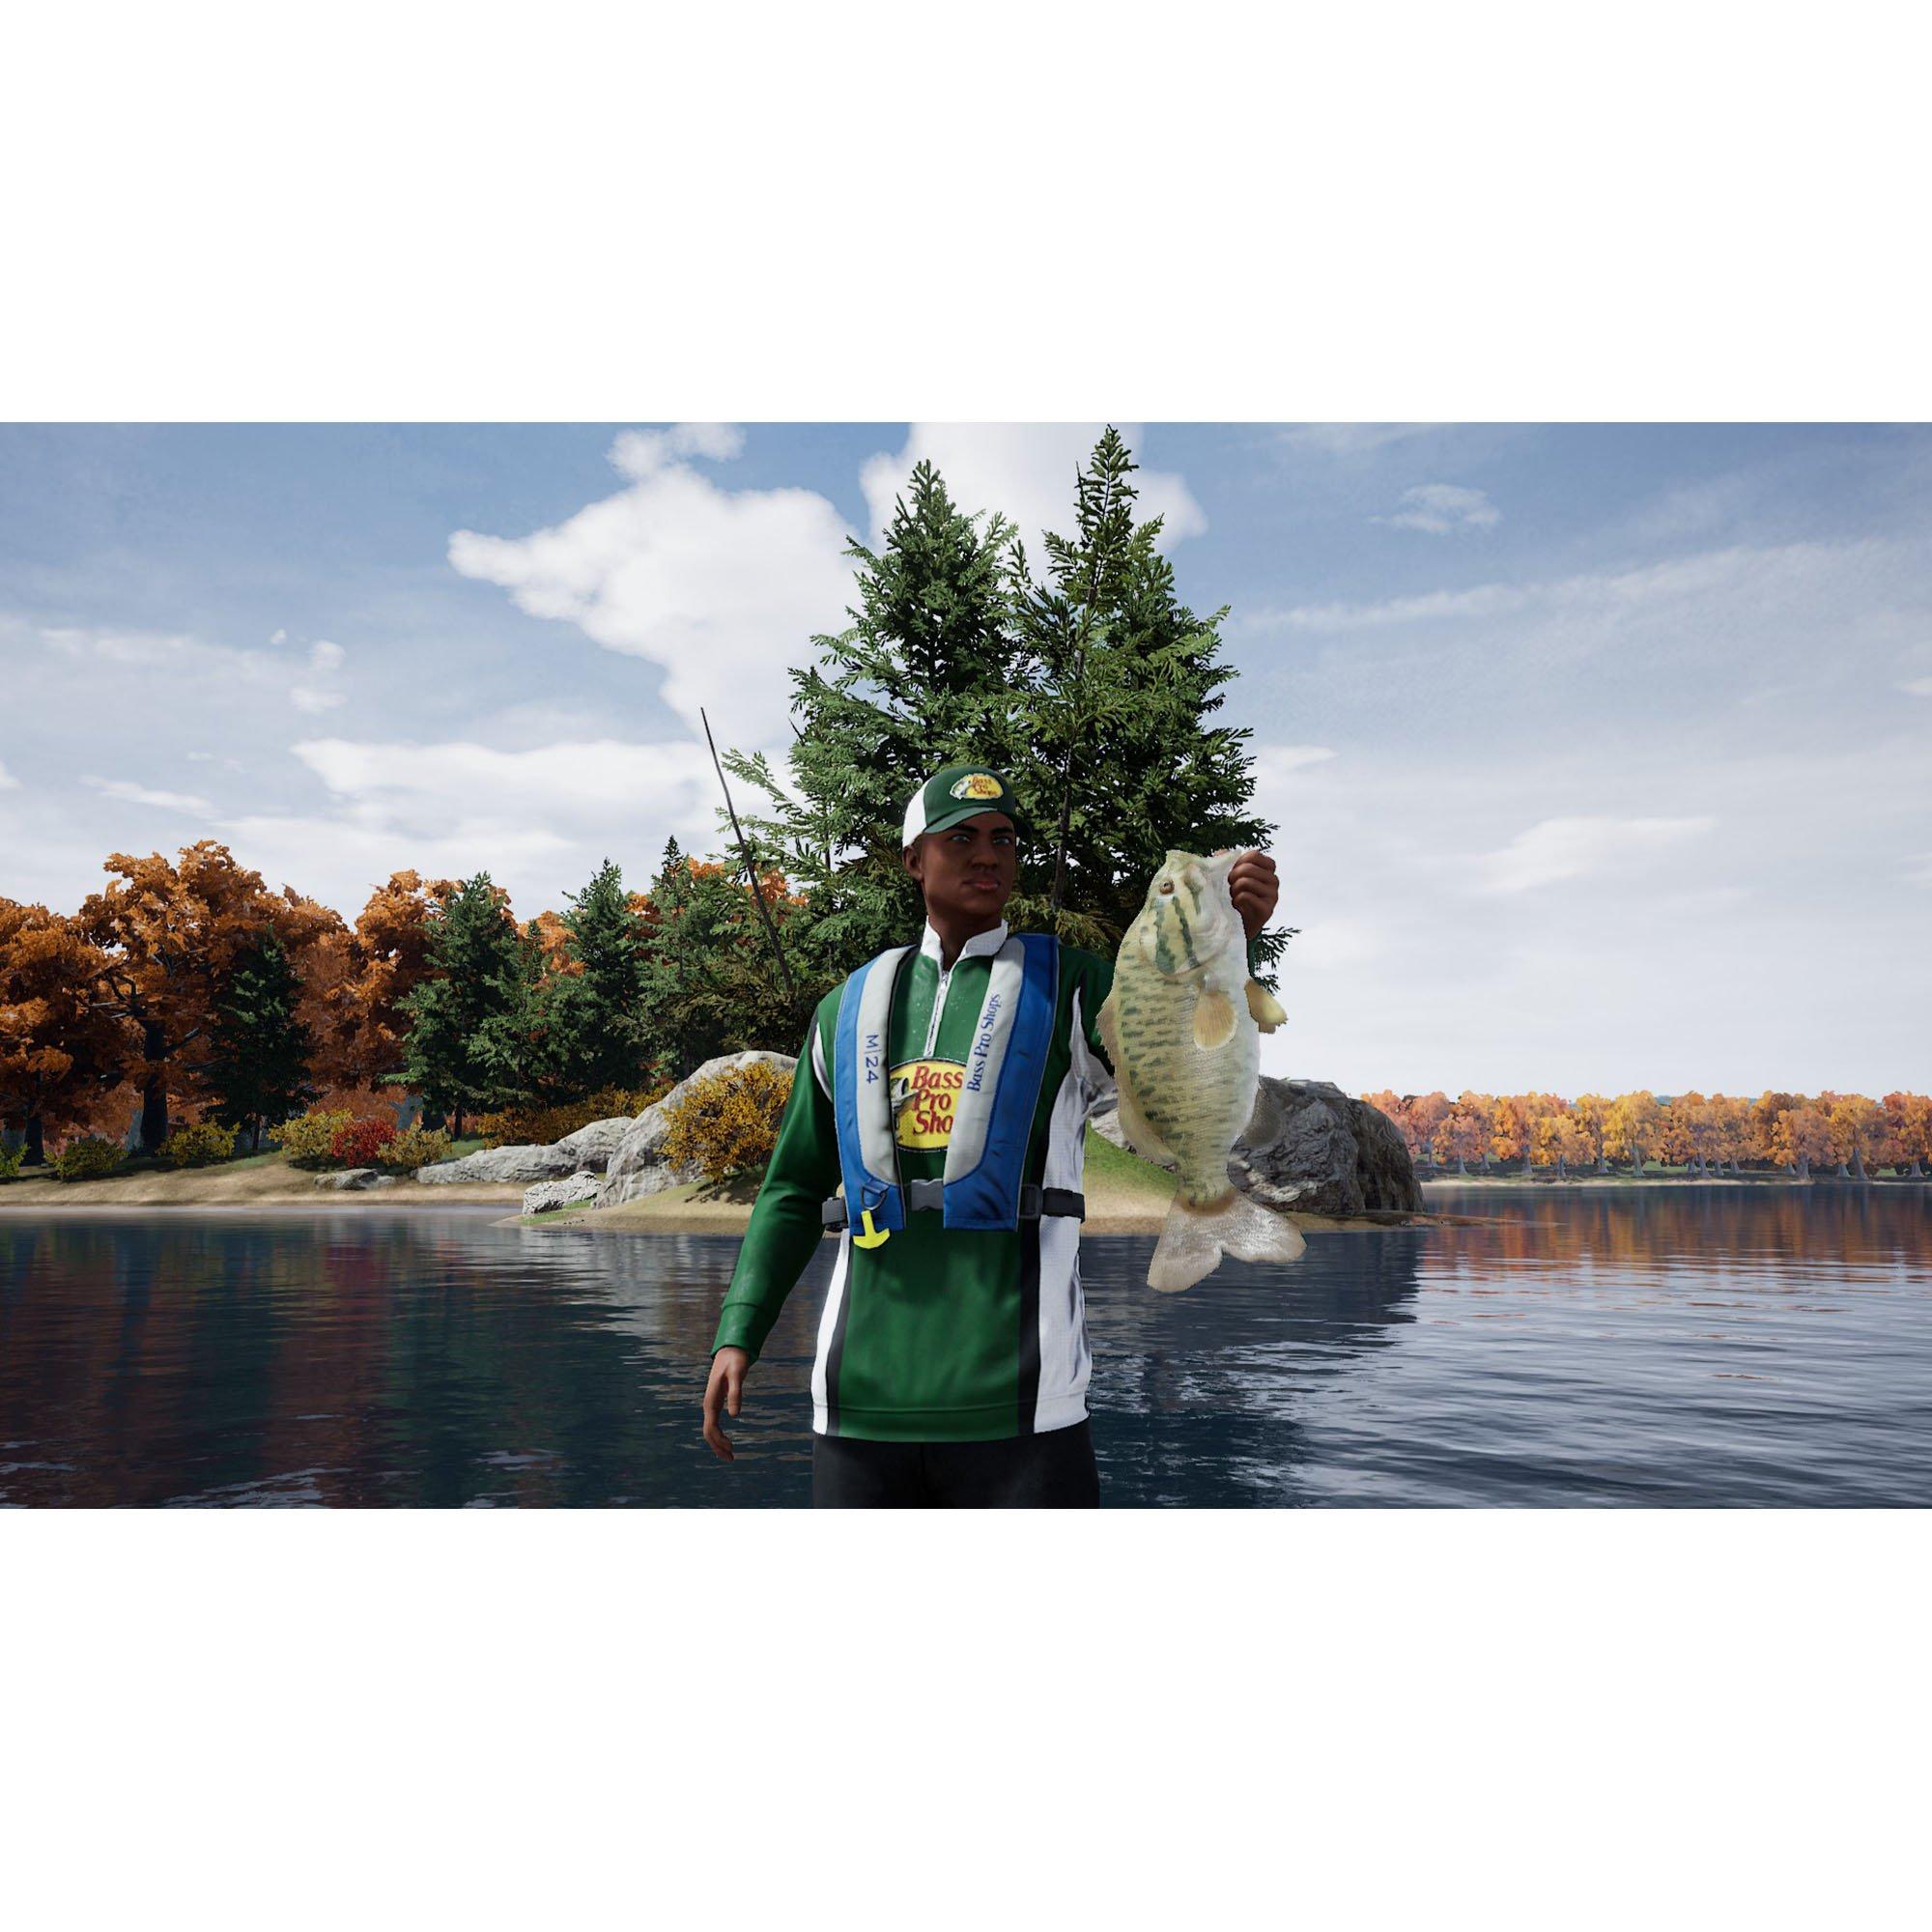 Buy Fishing Sim World: Bass Pro Shops Edition